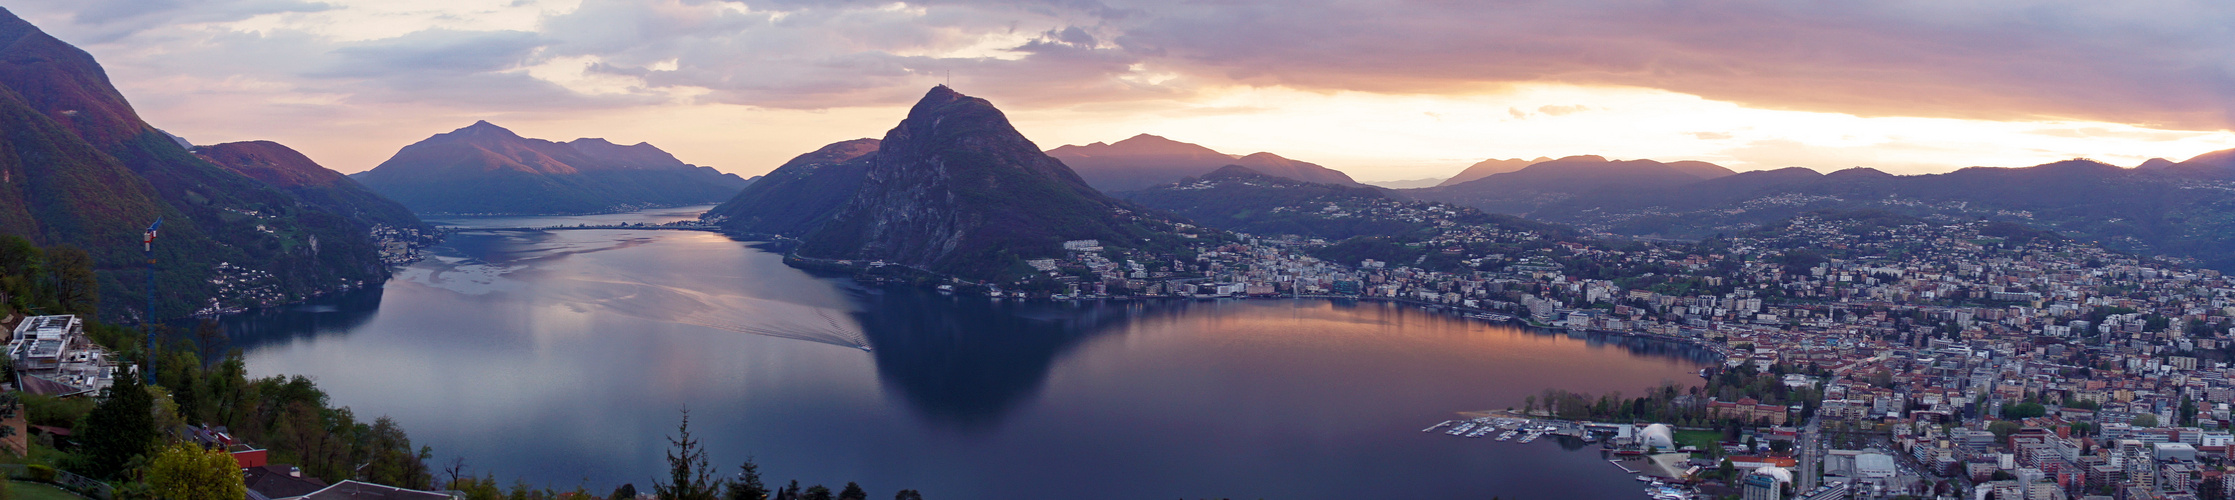 Sonnenuntergang in Lugano panorama